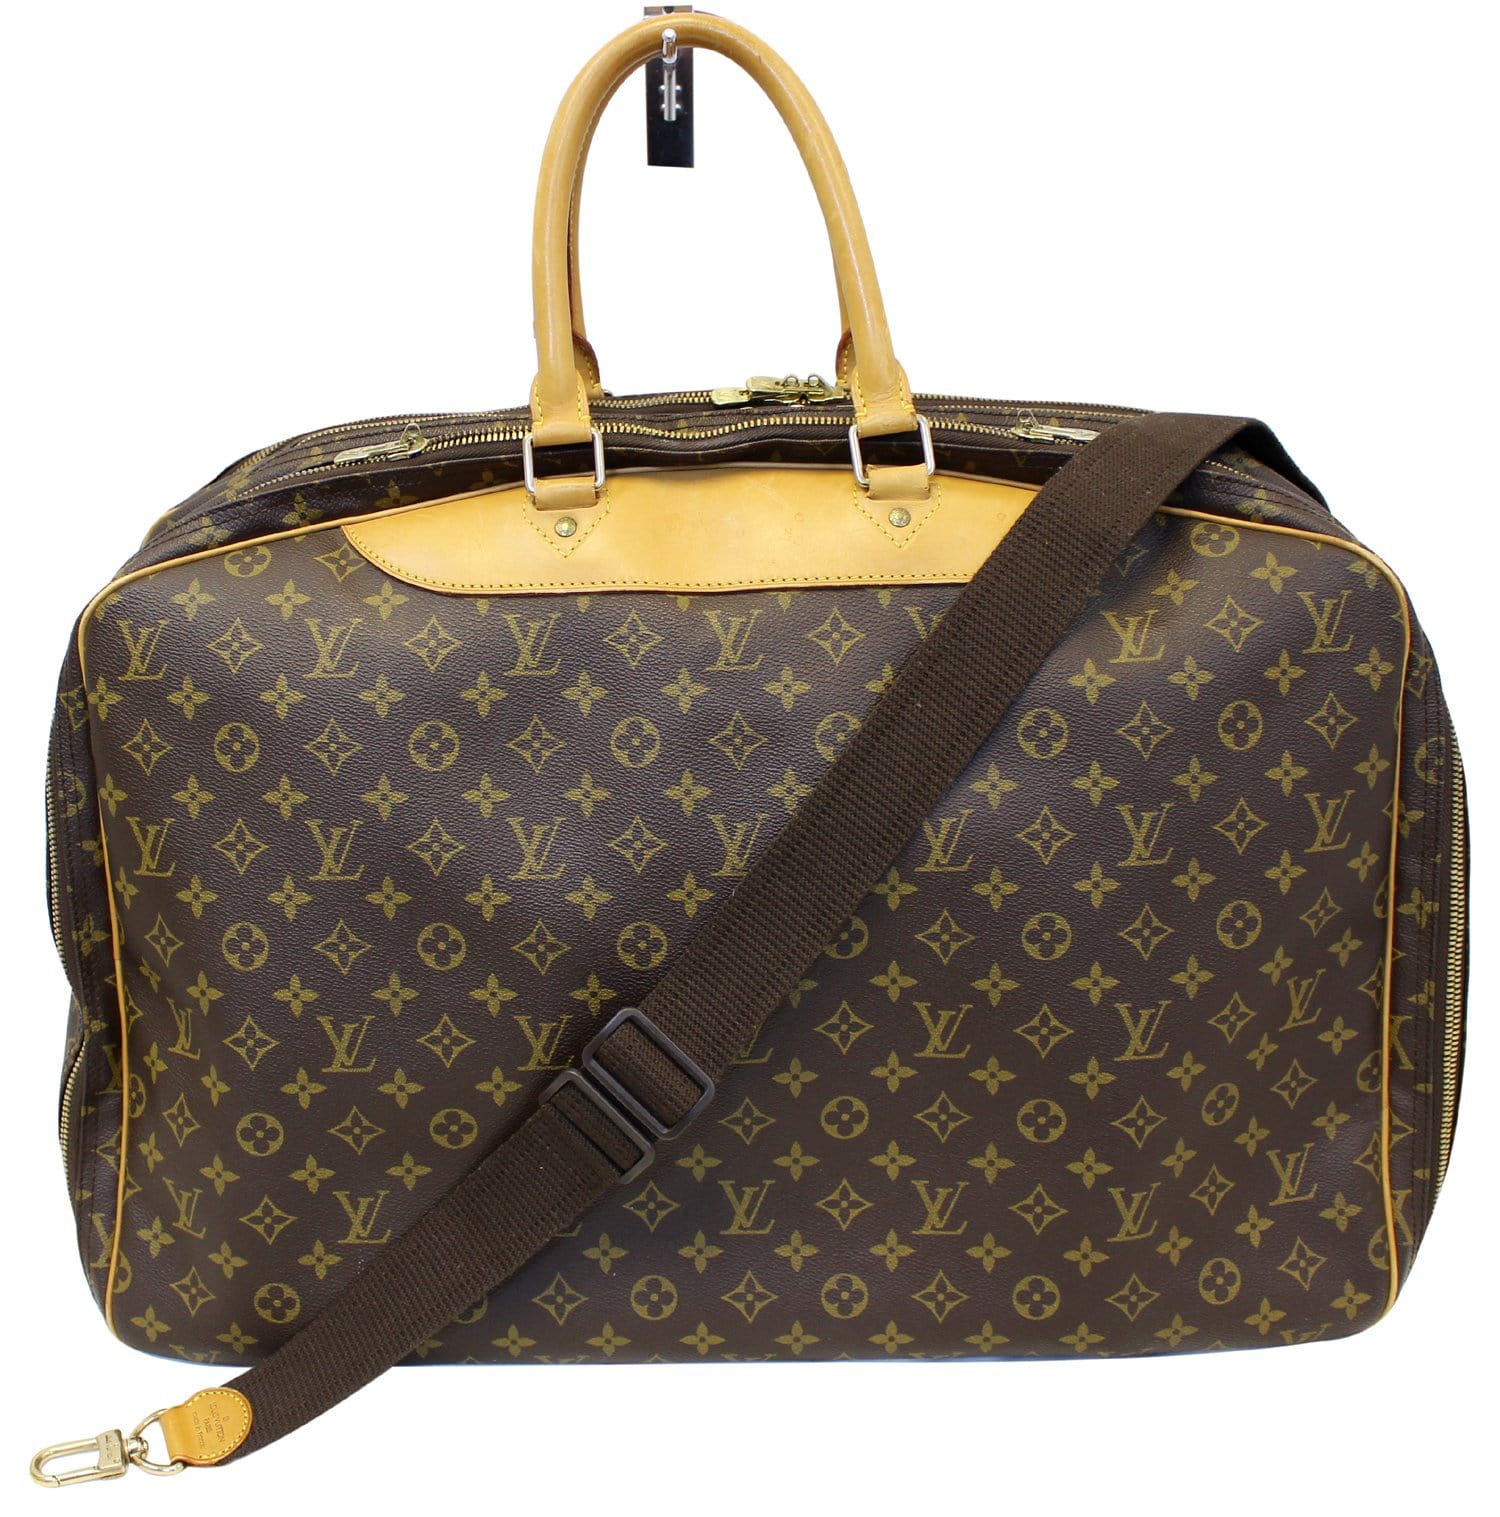 Louis Vuitton Rare Monogram Sac 3 Poches Suitcase Luggage916lv2